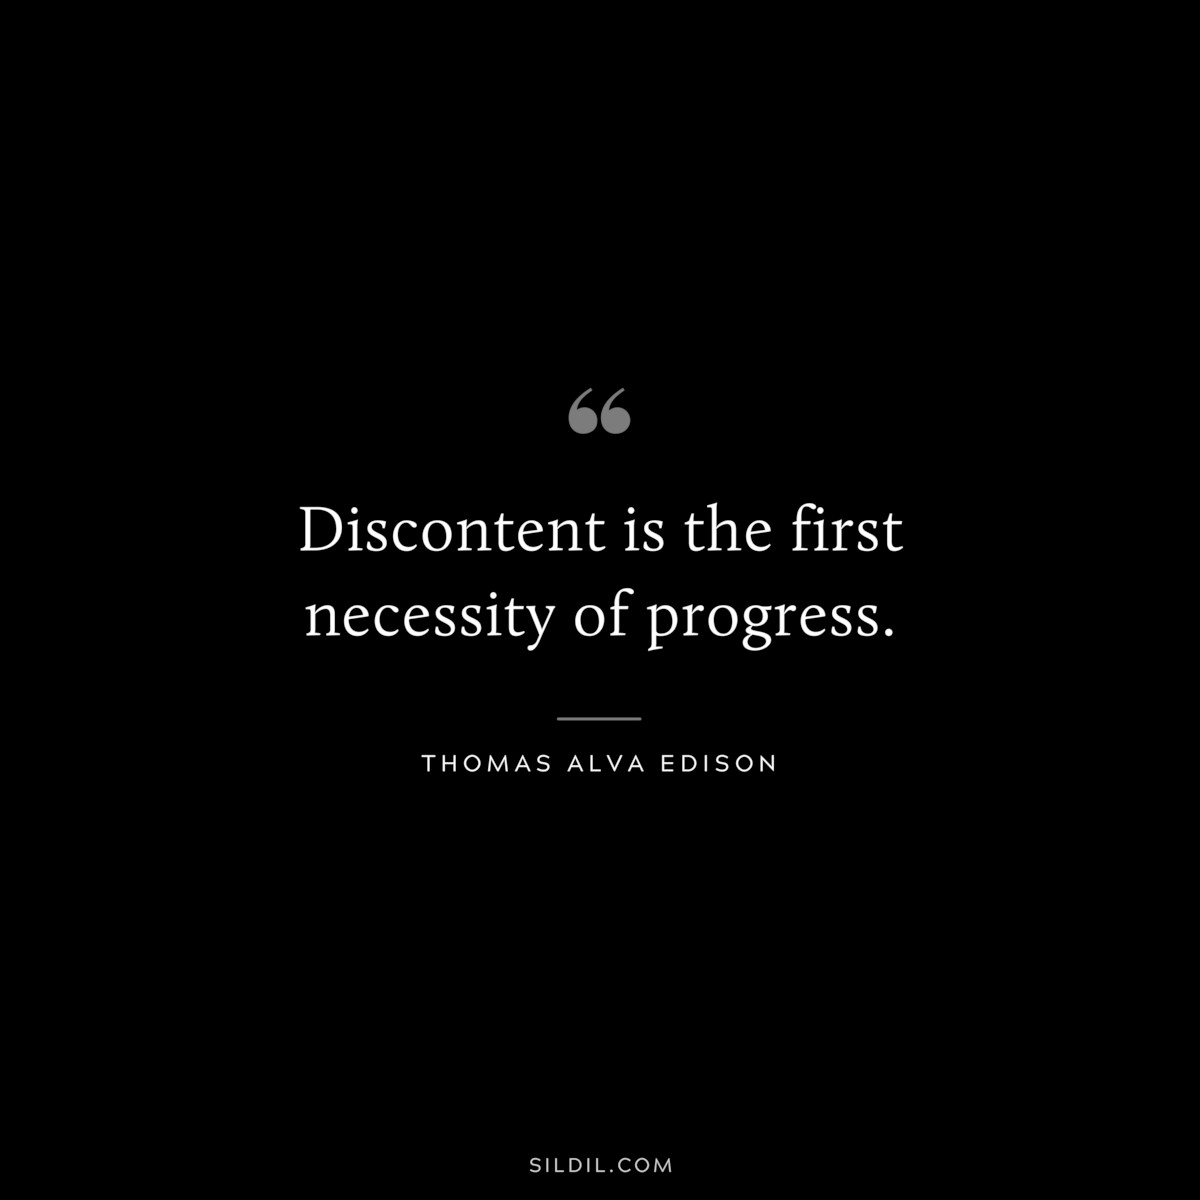 Discontent is the first necessity of progress. ― Thomas Alva Edison